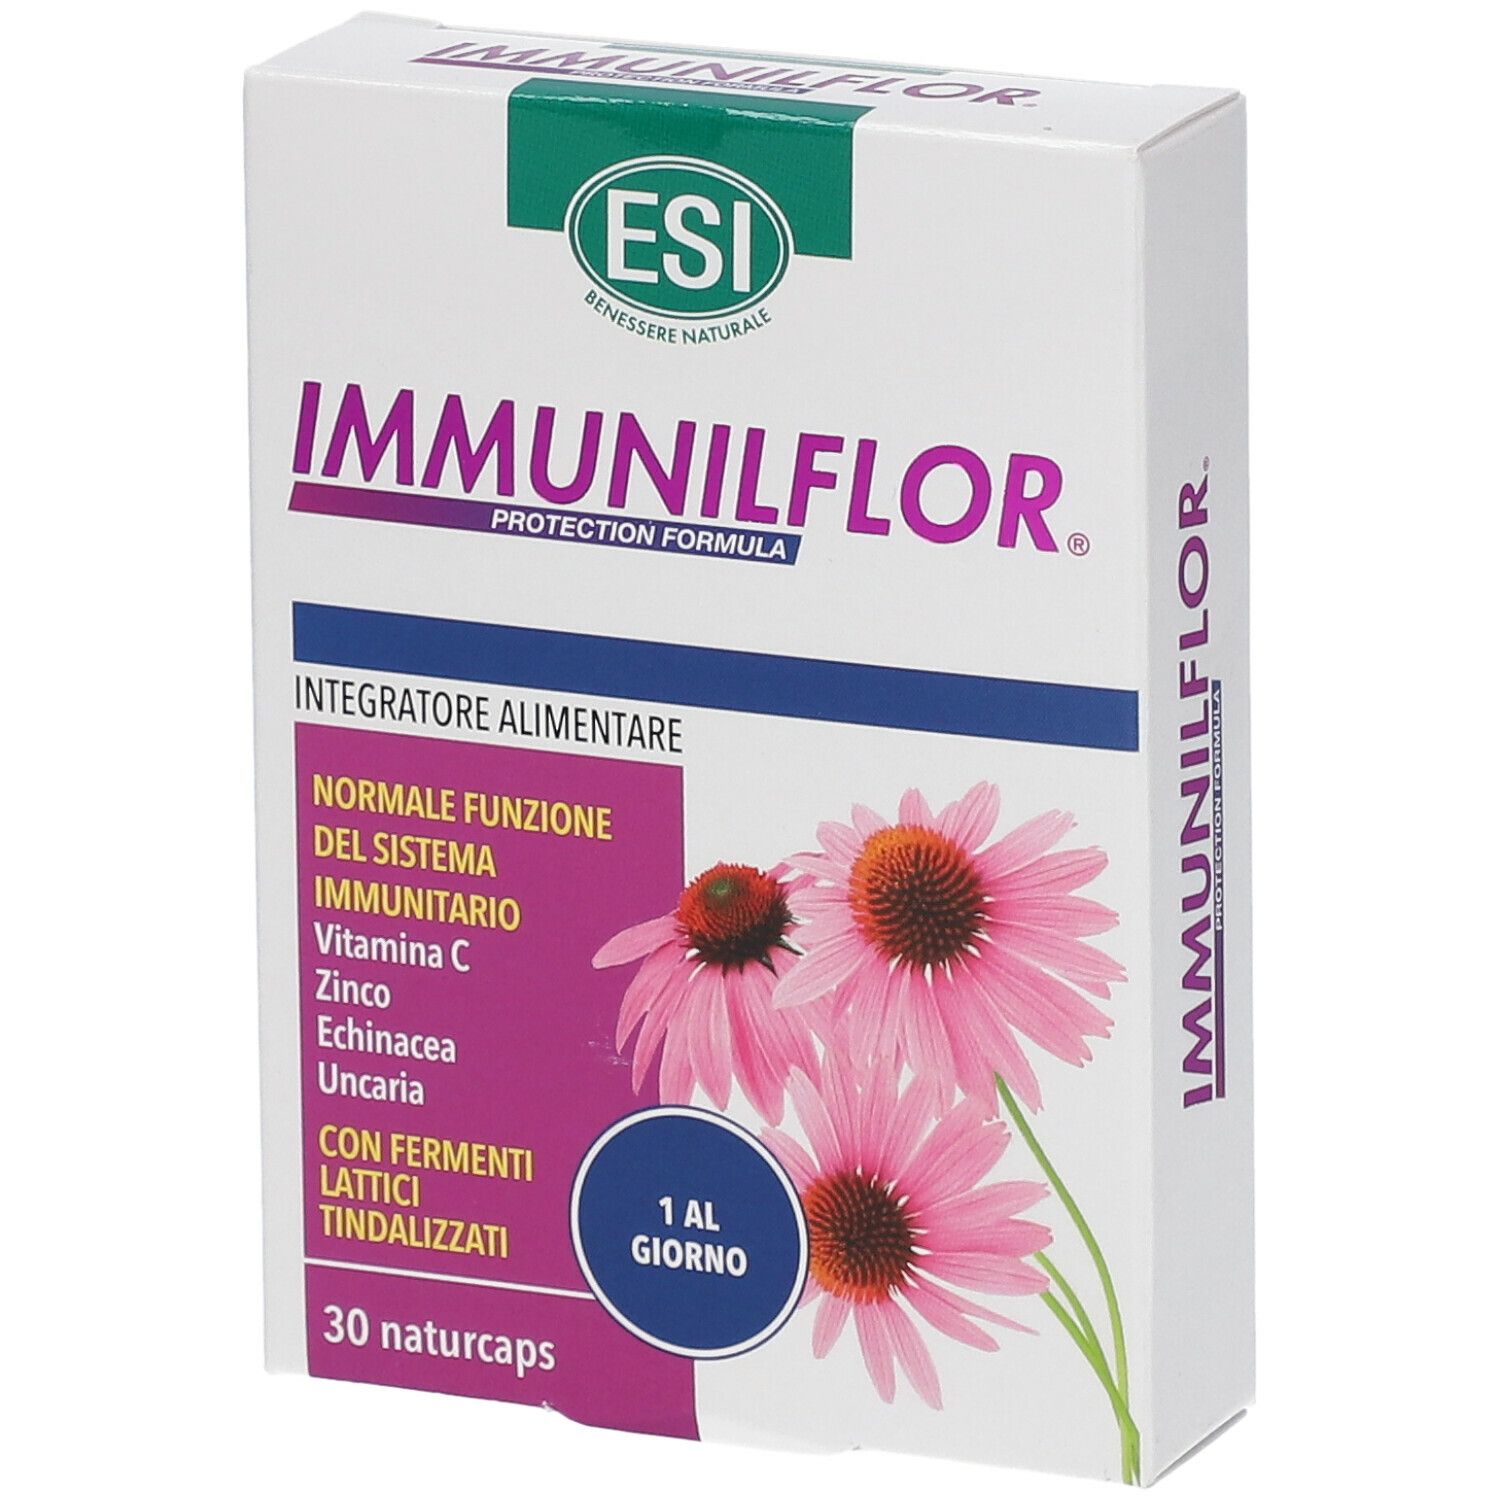 ESI Immunilflor® Protection Formula